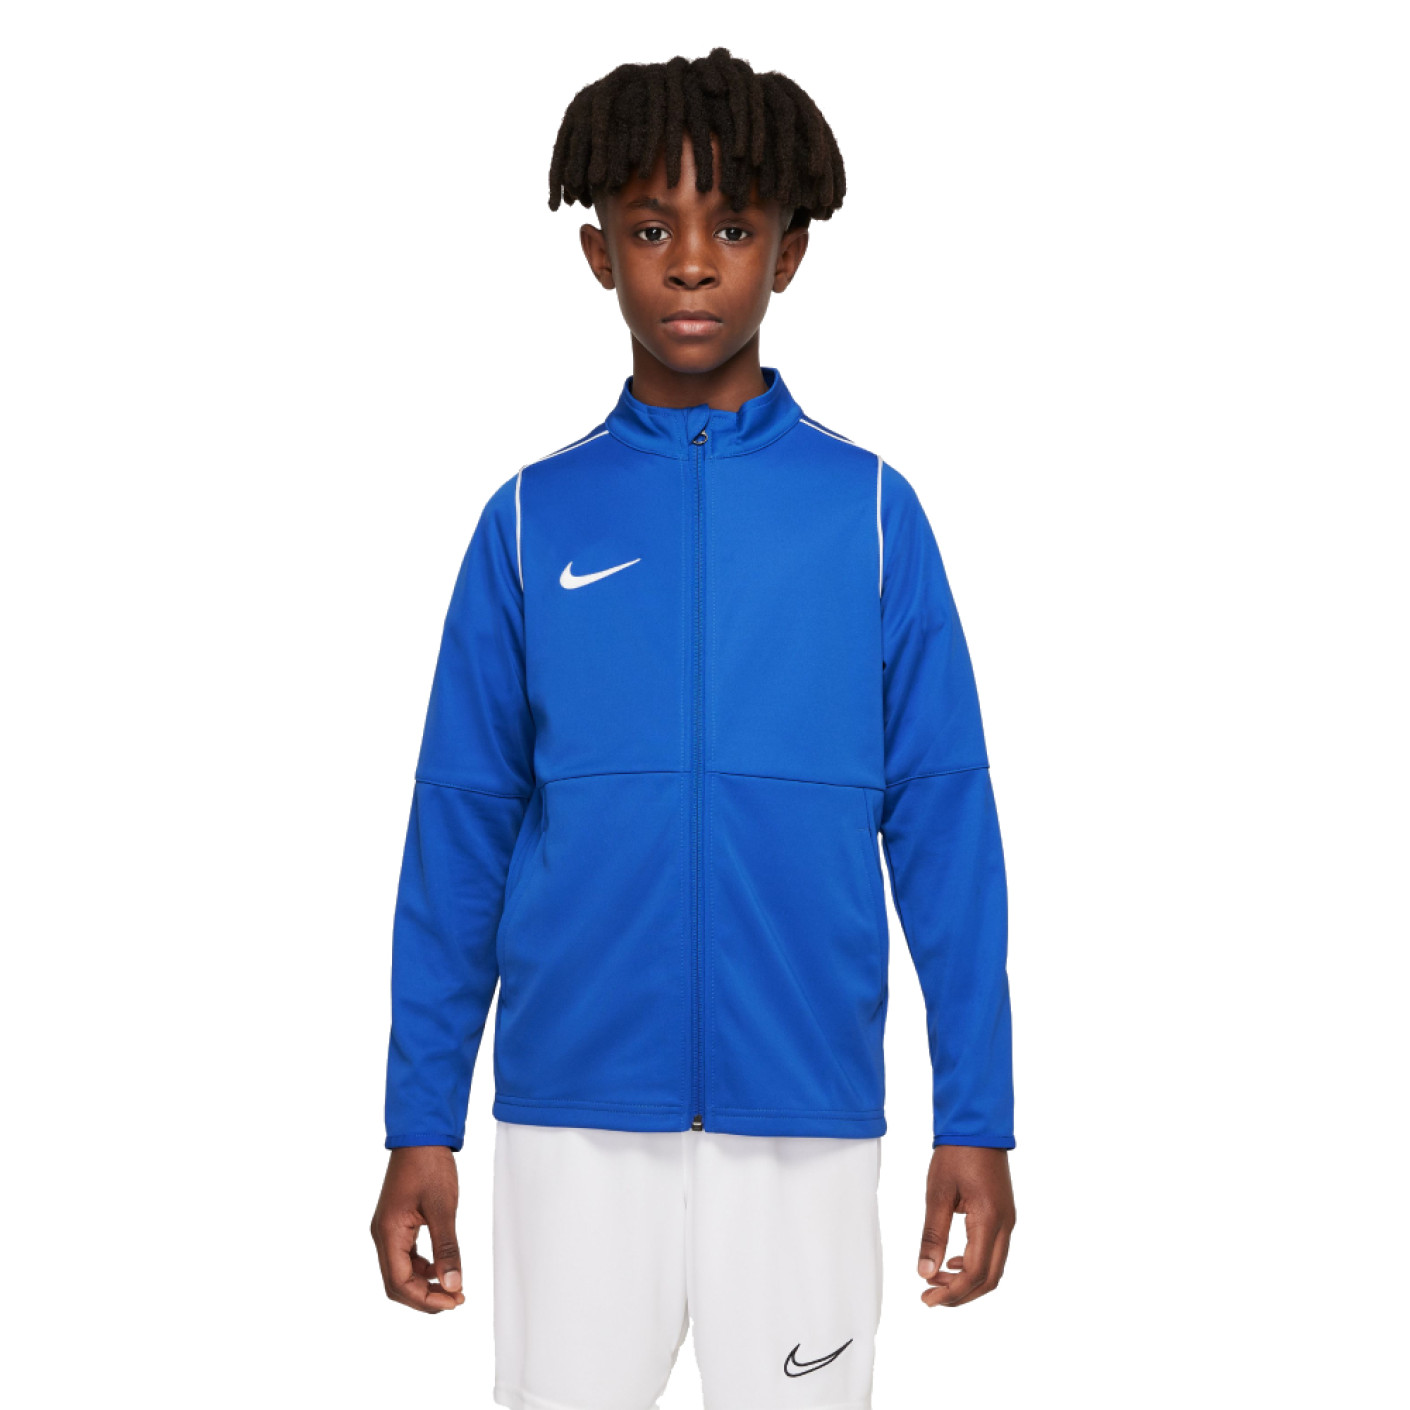 Nike Dry Park 20 Training Jacket Kids Royal Blue White